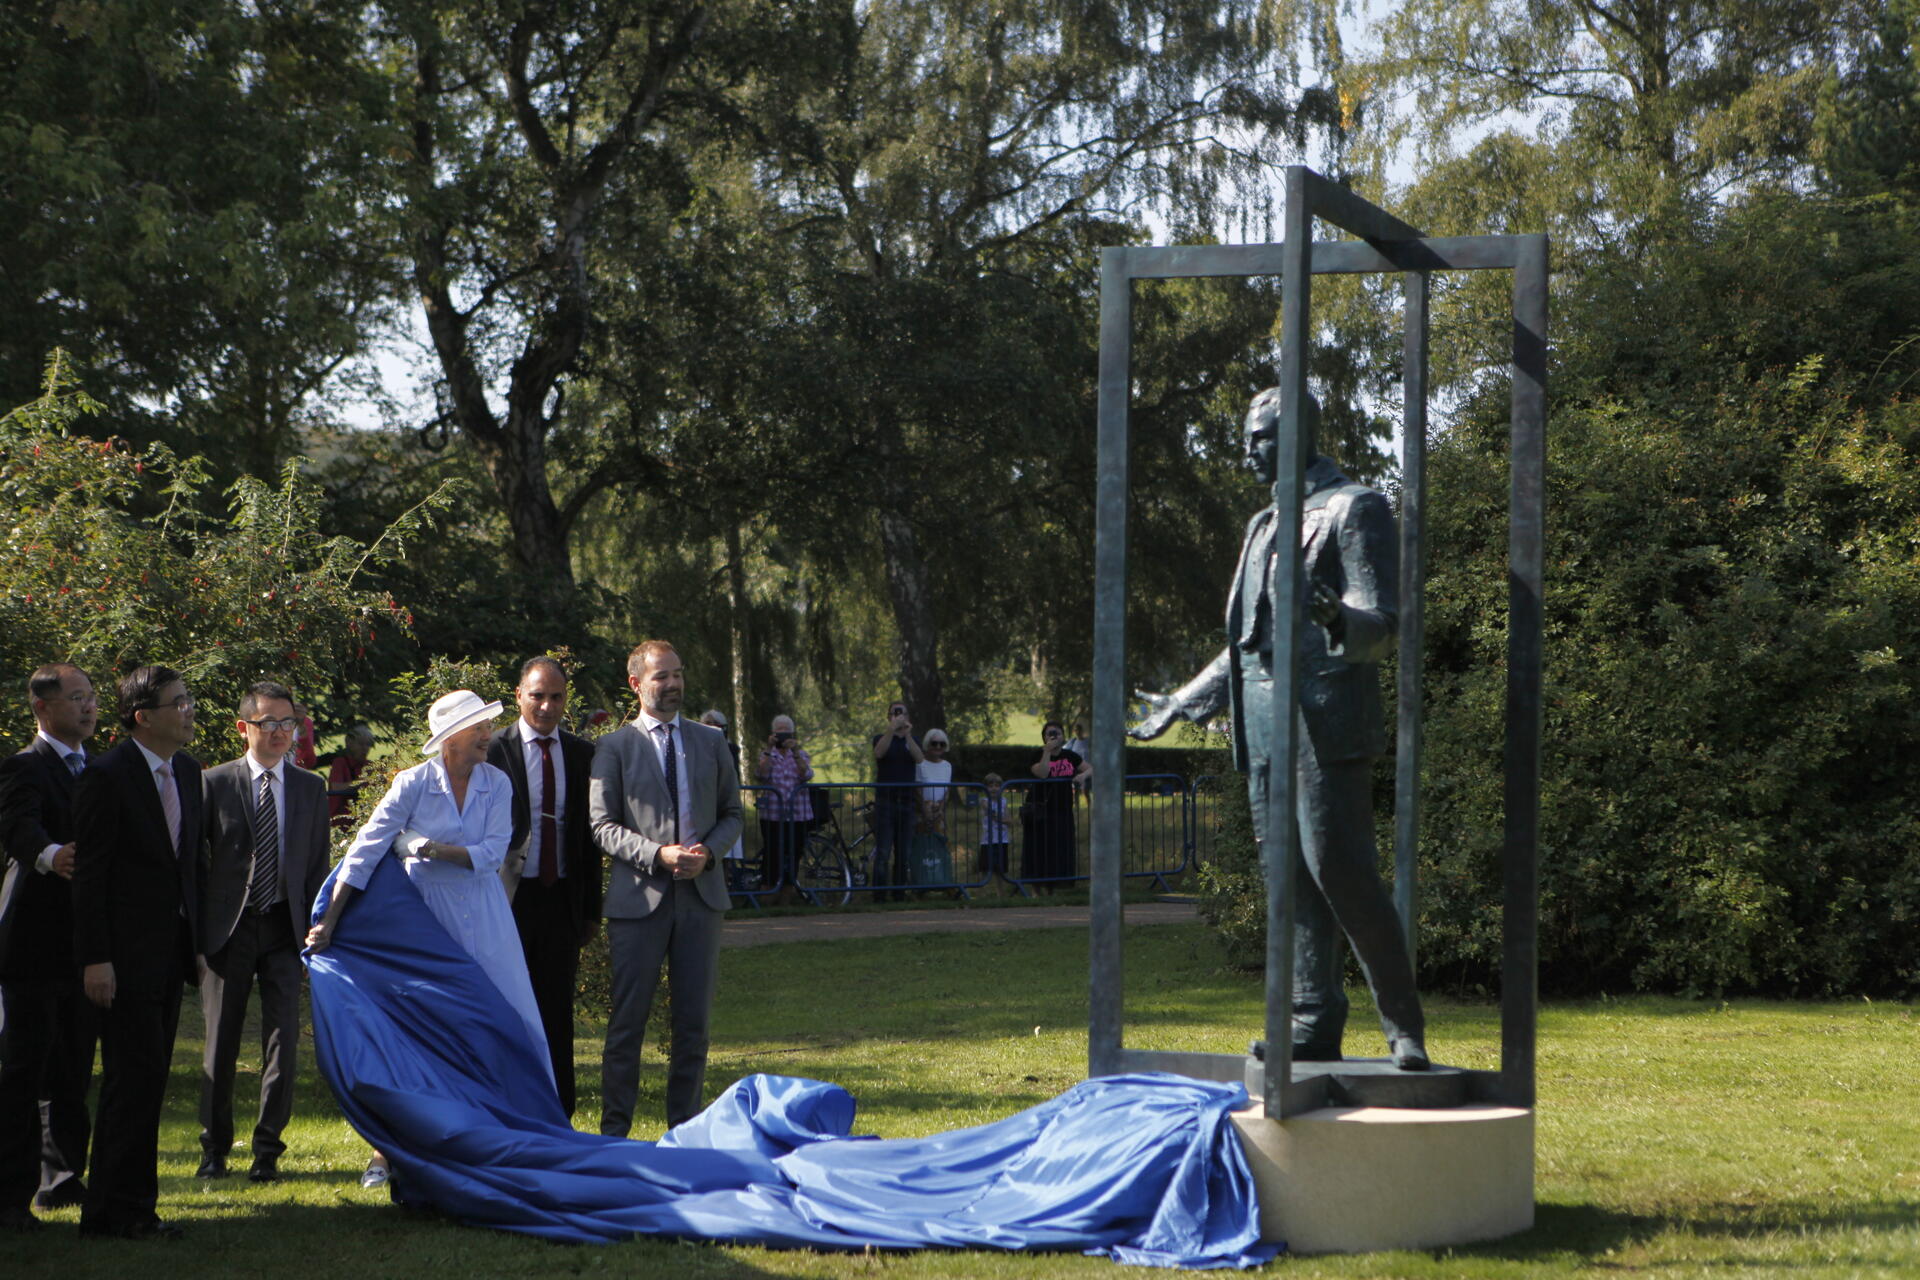 The Dedication of the Sindberg Statue to Aarhus, Denmark